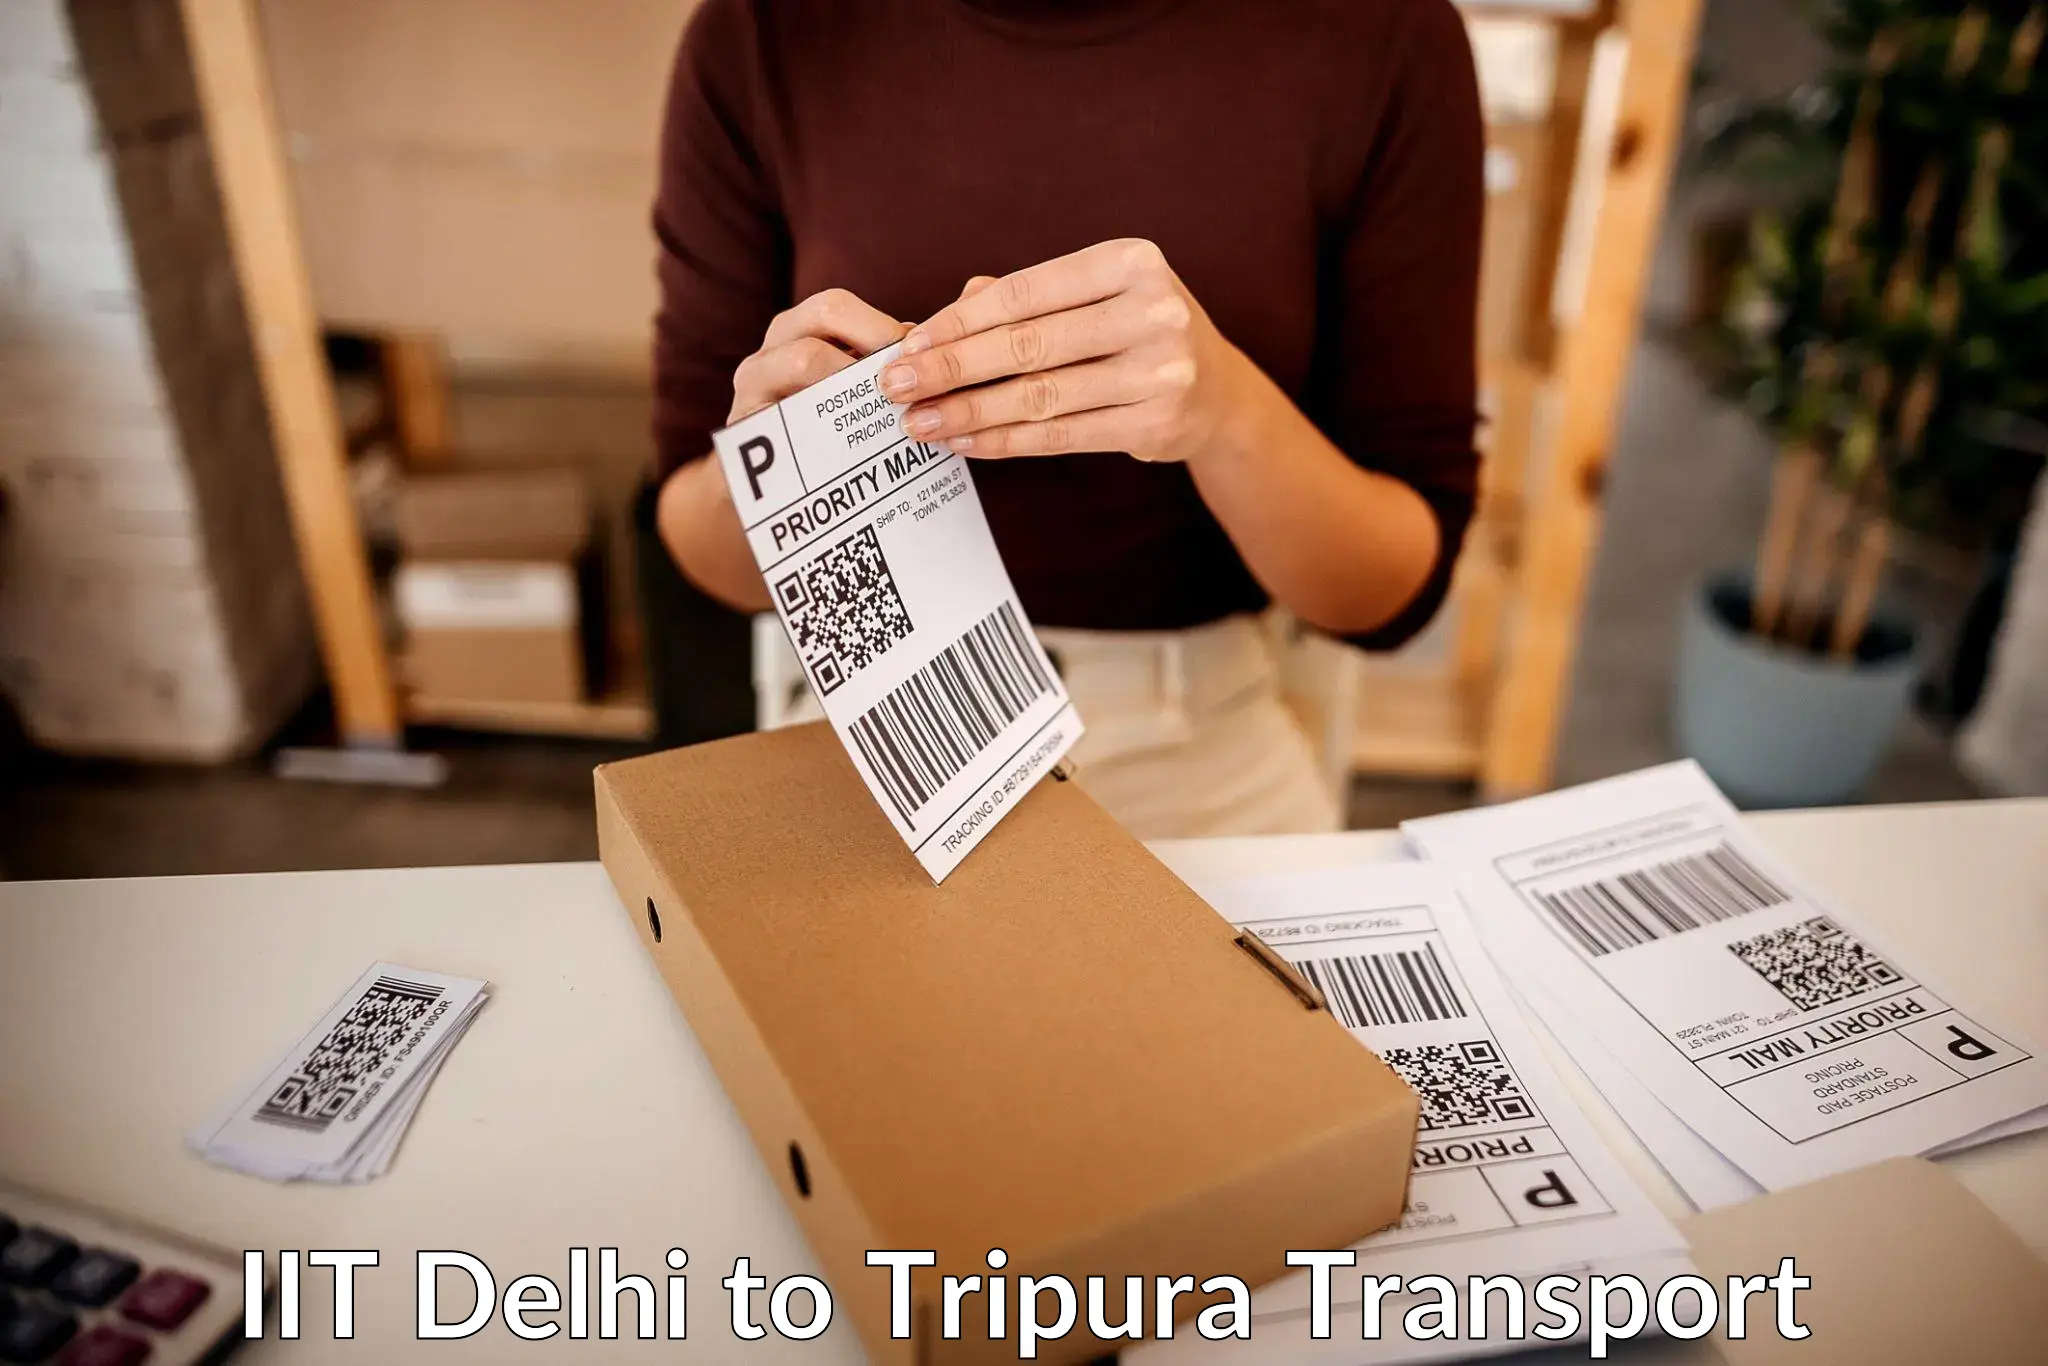 Cycle transportation service IIT Delhi to Tripura